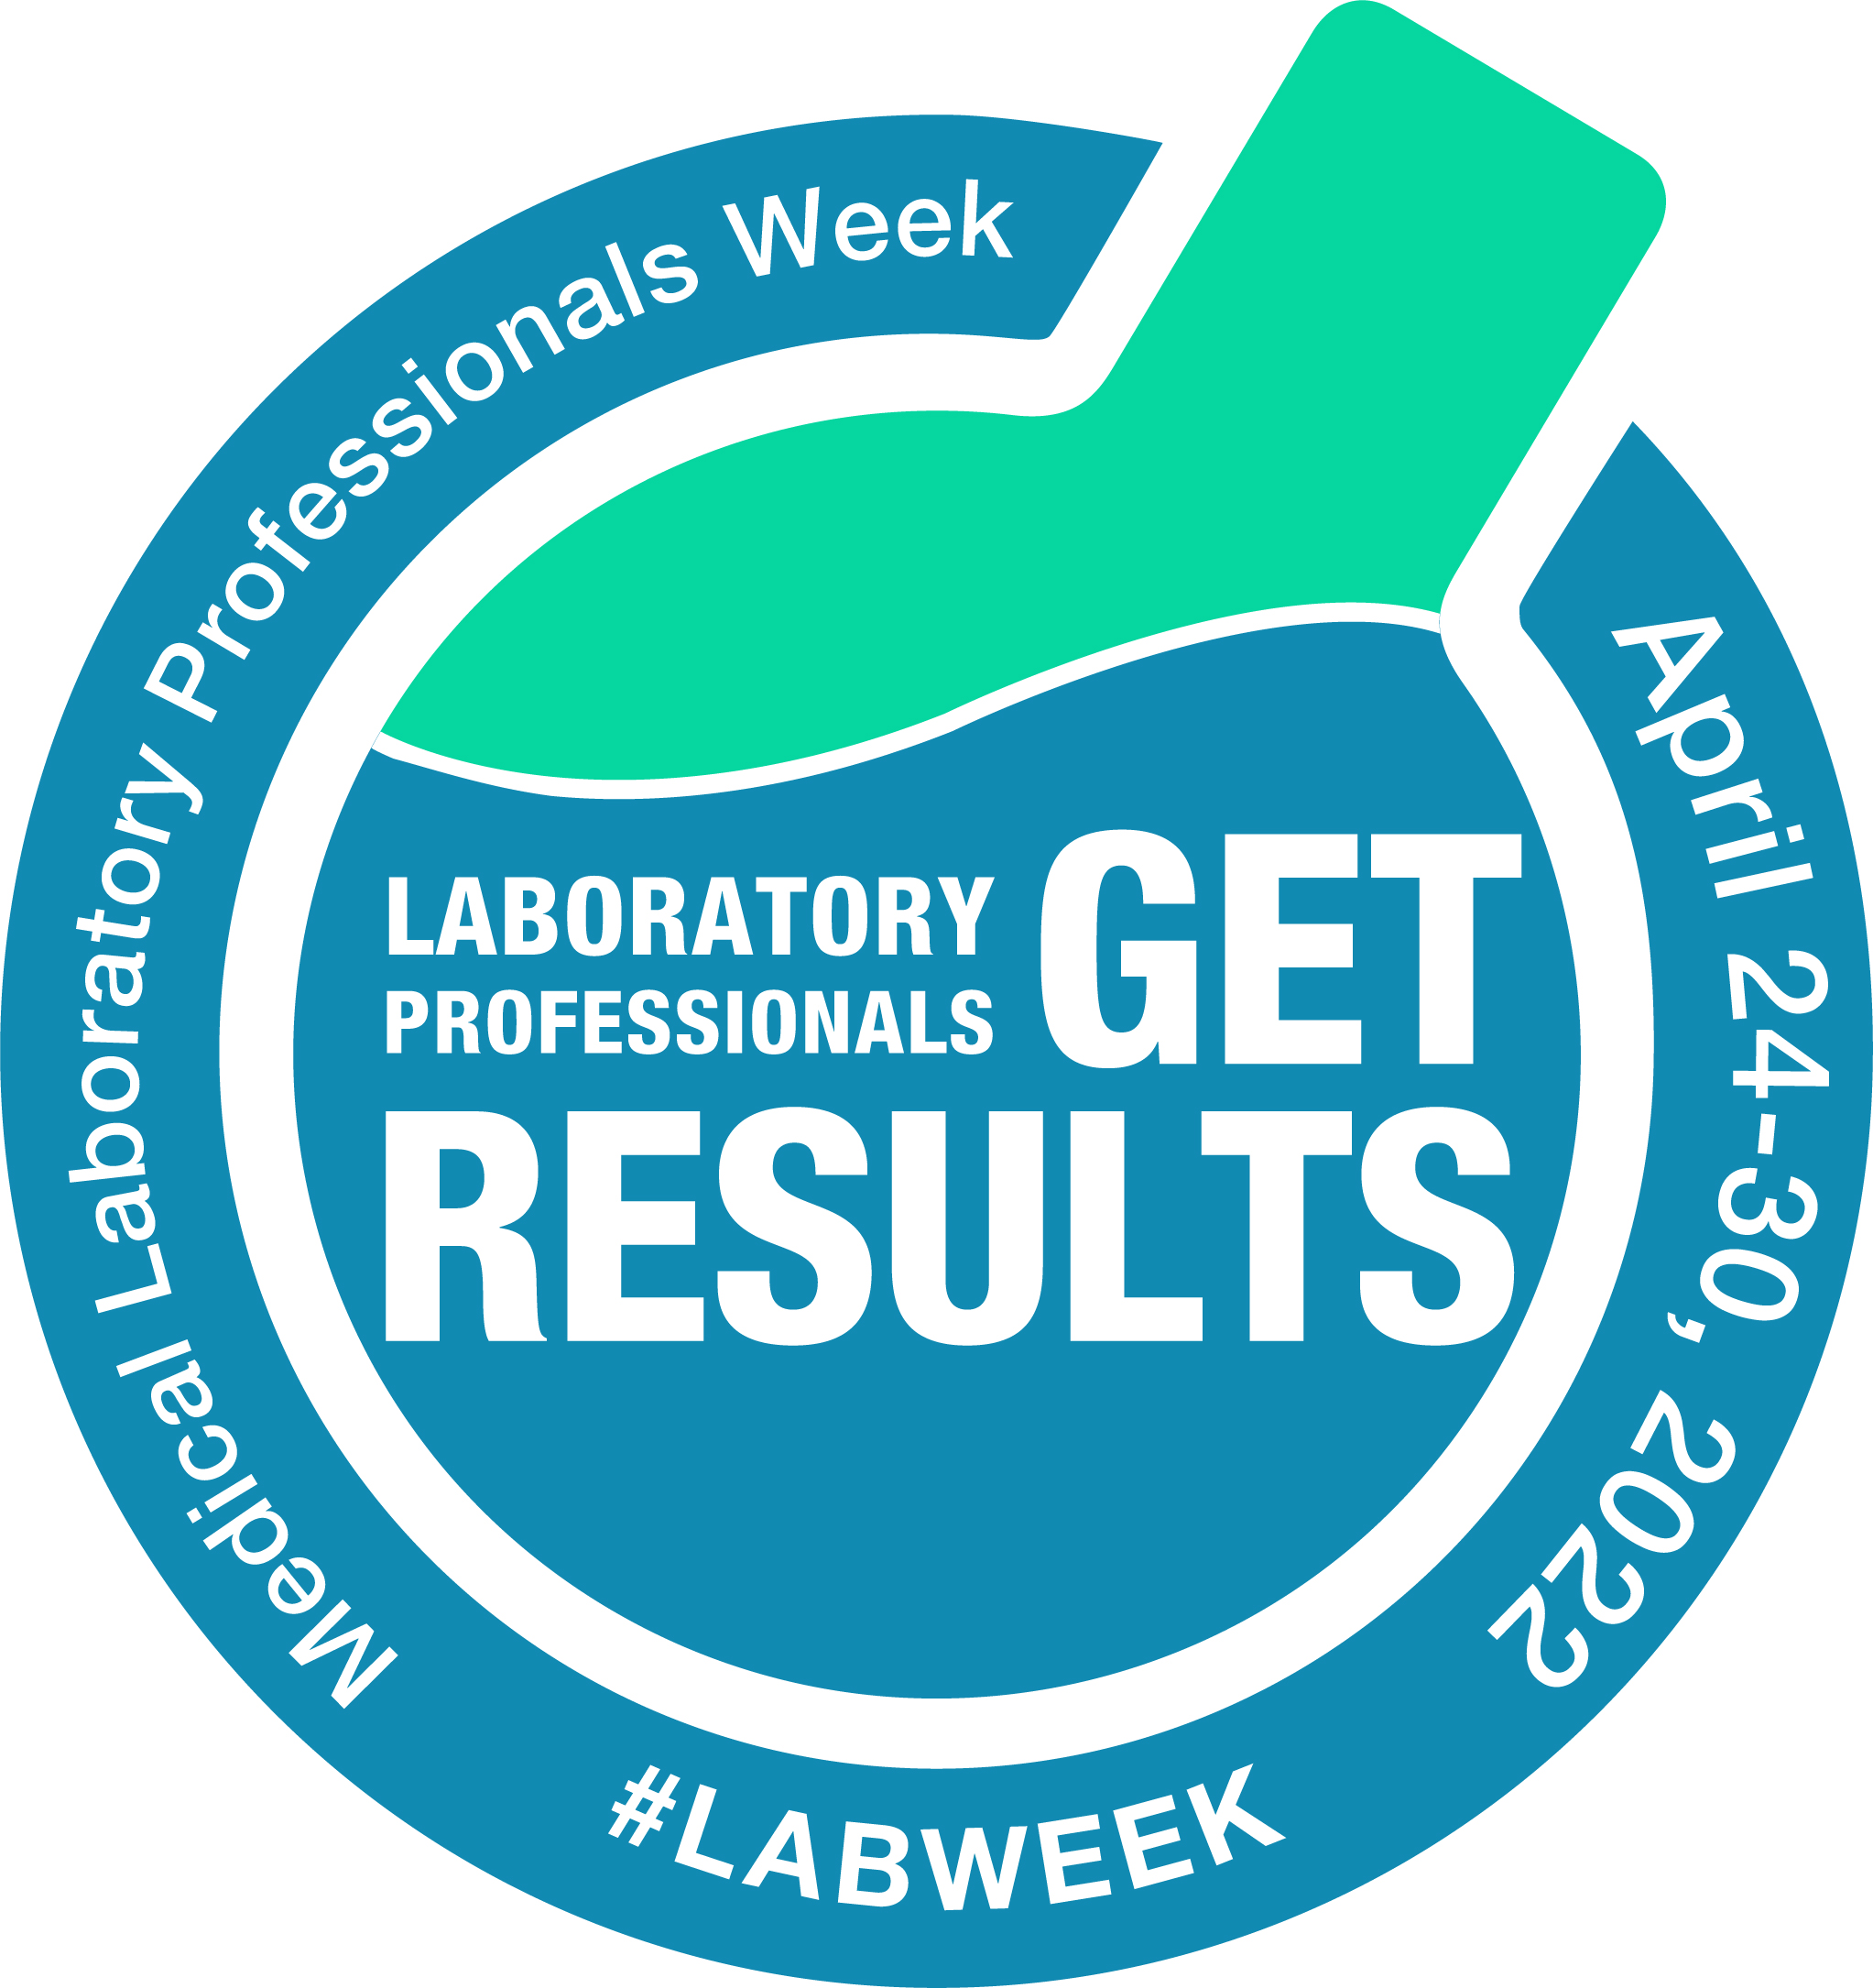 Happy Medical Laboratory Professionals Week!